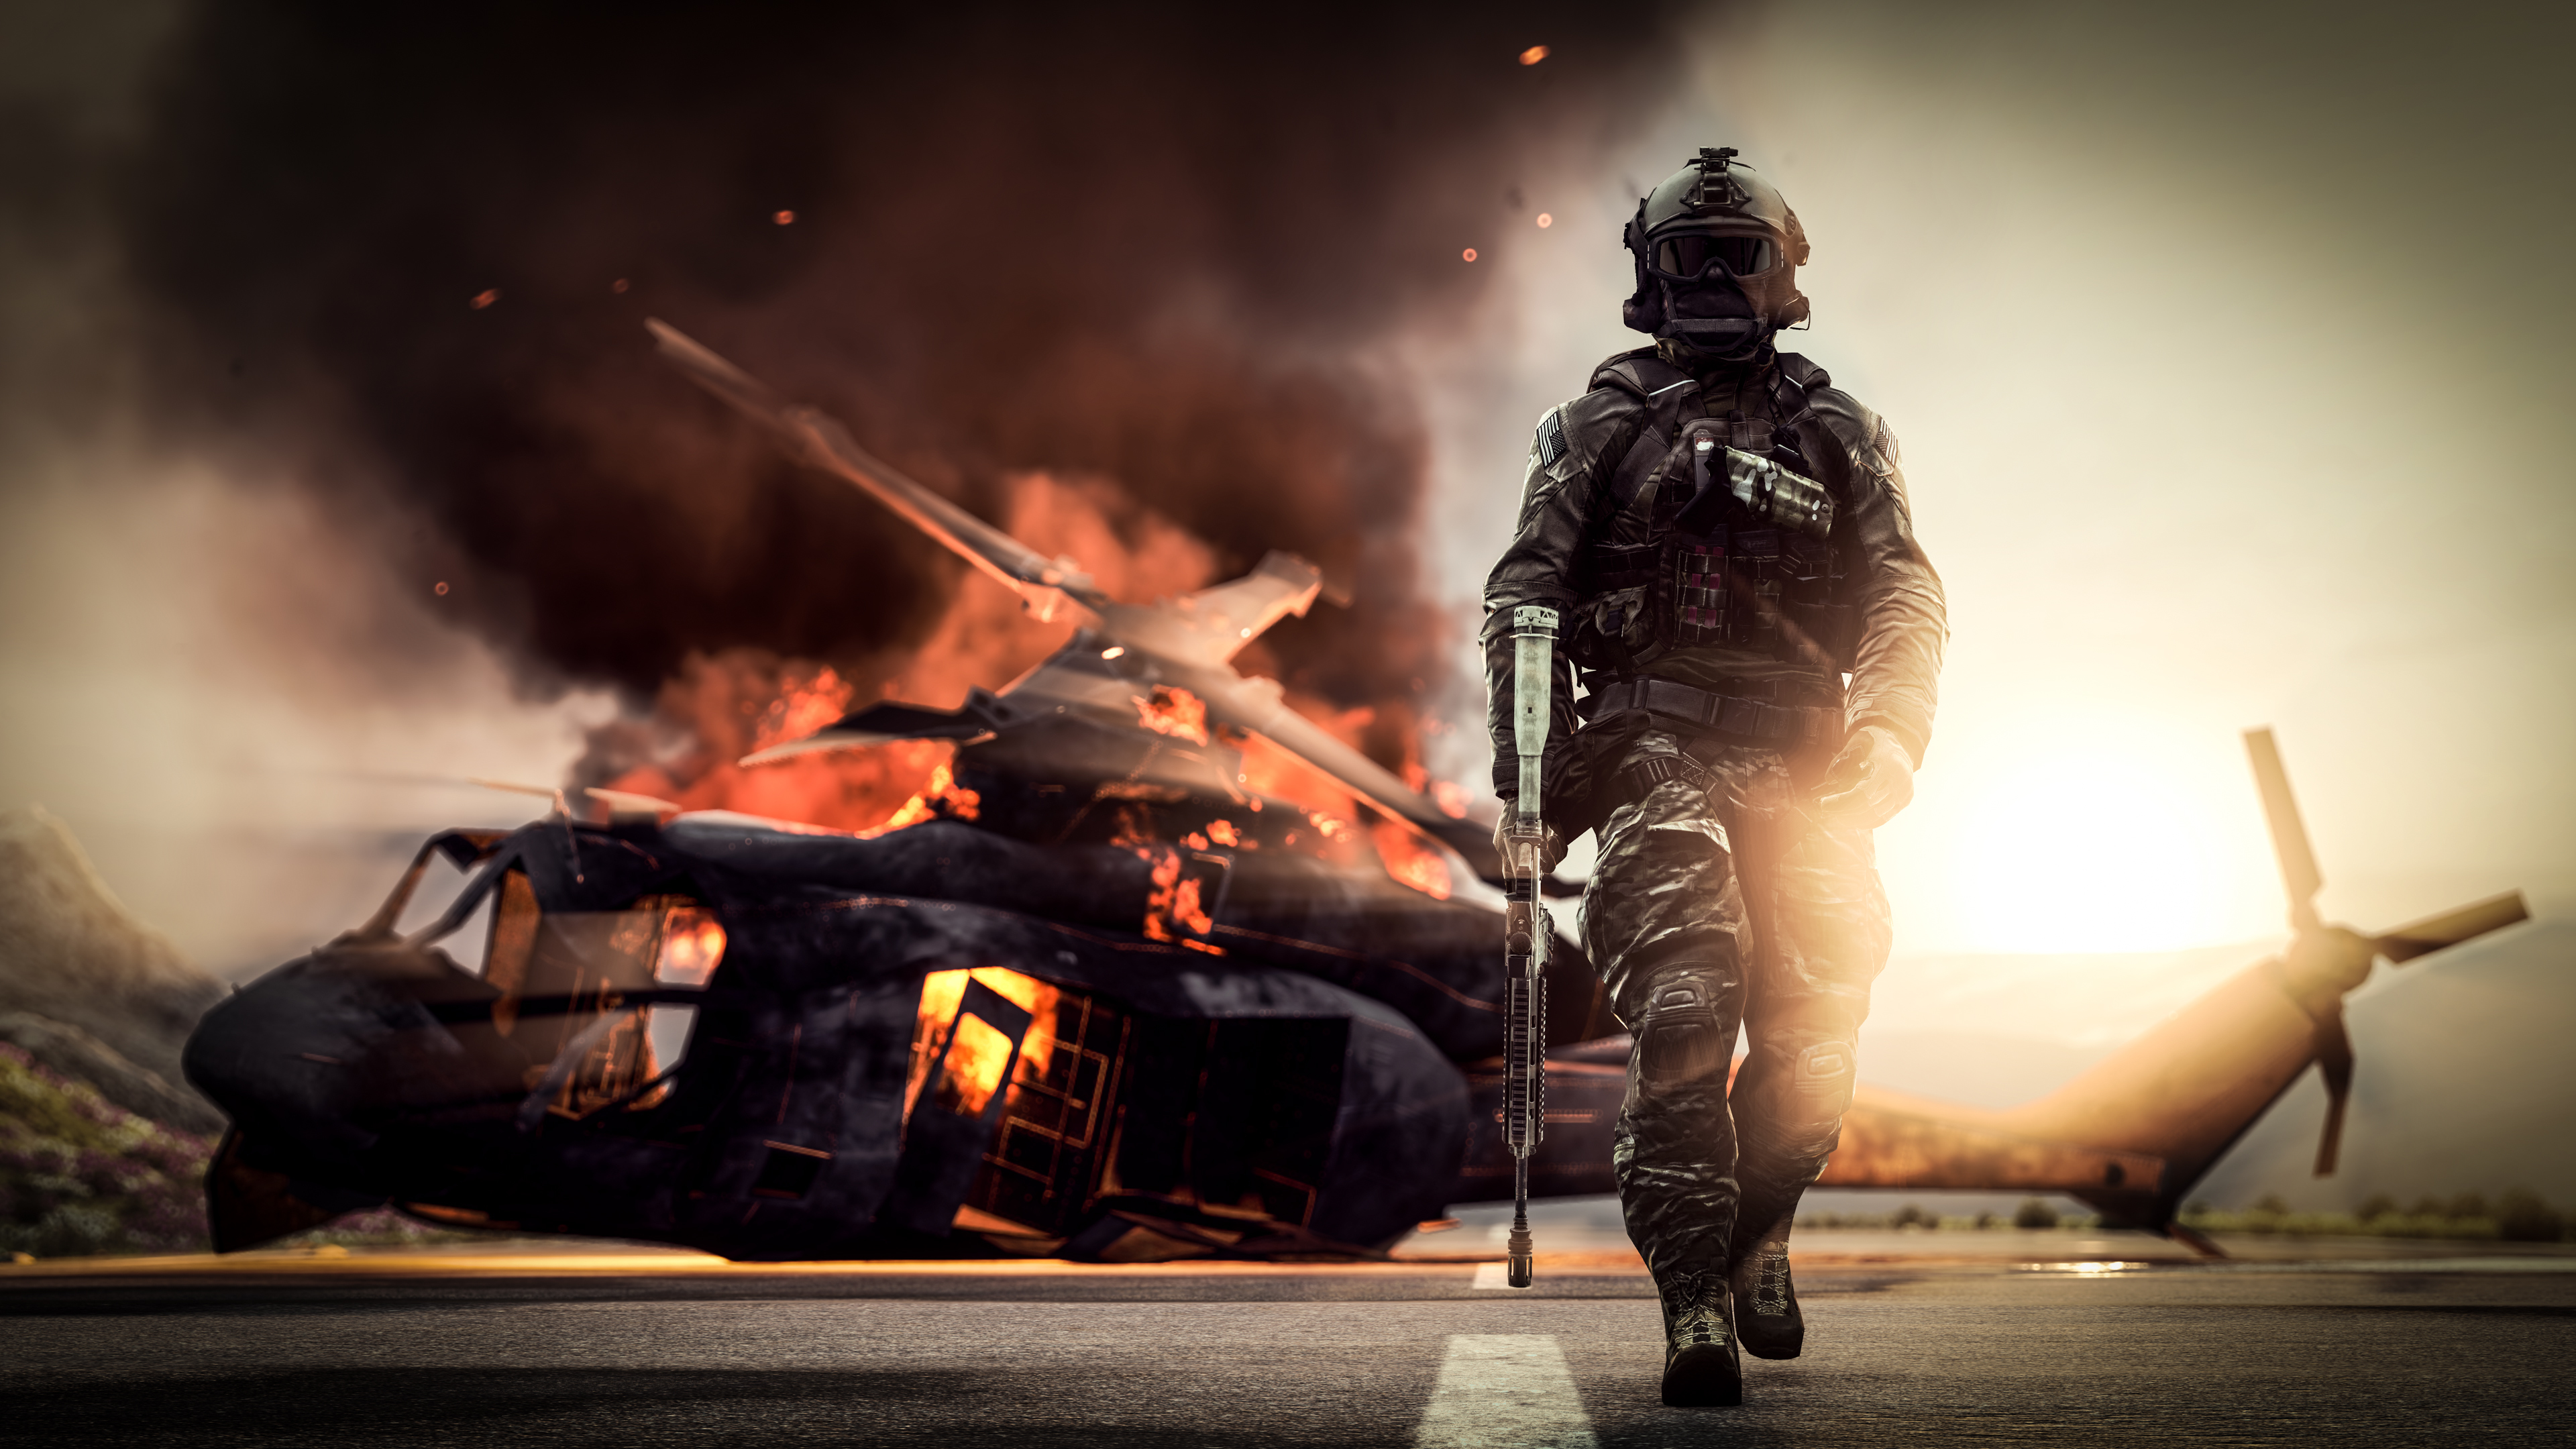 Battlefield 4 Solider 4k, HD Games, 4k Wallpapers, Images